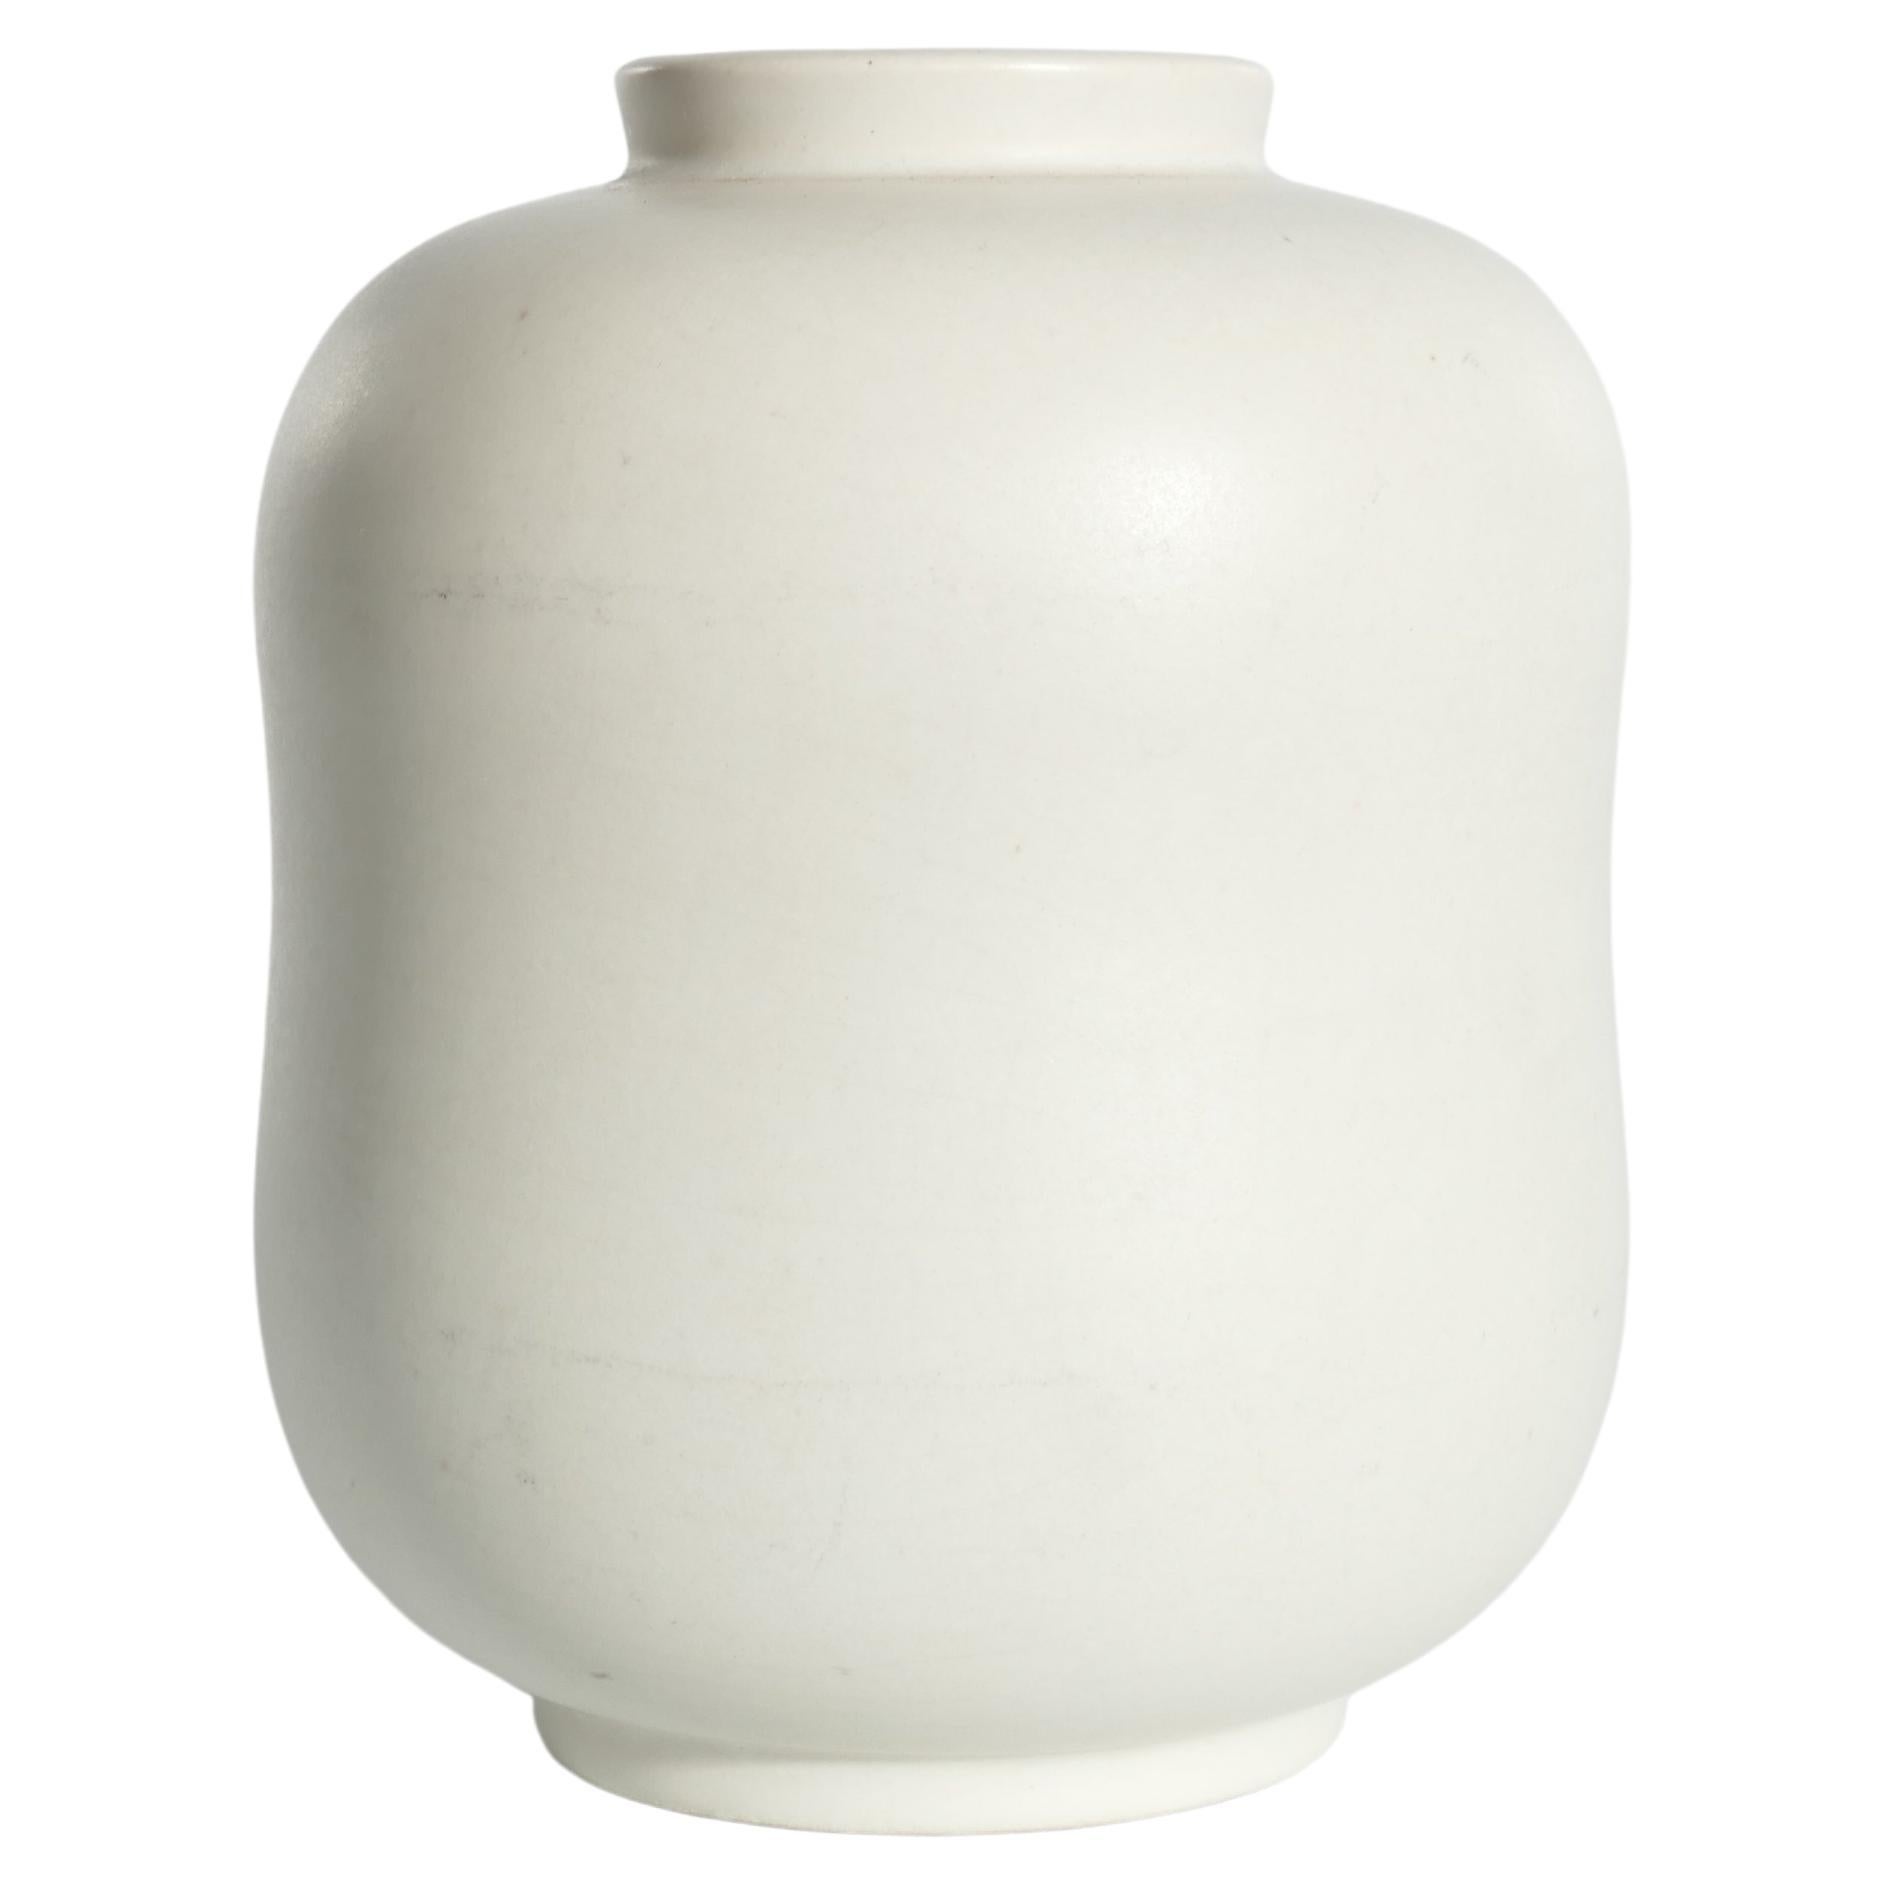 1940’s Scandinavian Modern Carrara Vase by Wilhelm Kåge for Gustavsberg   For Sale